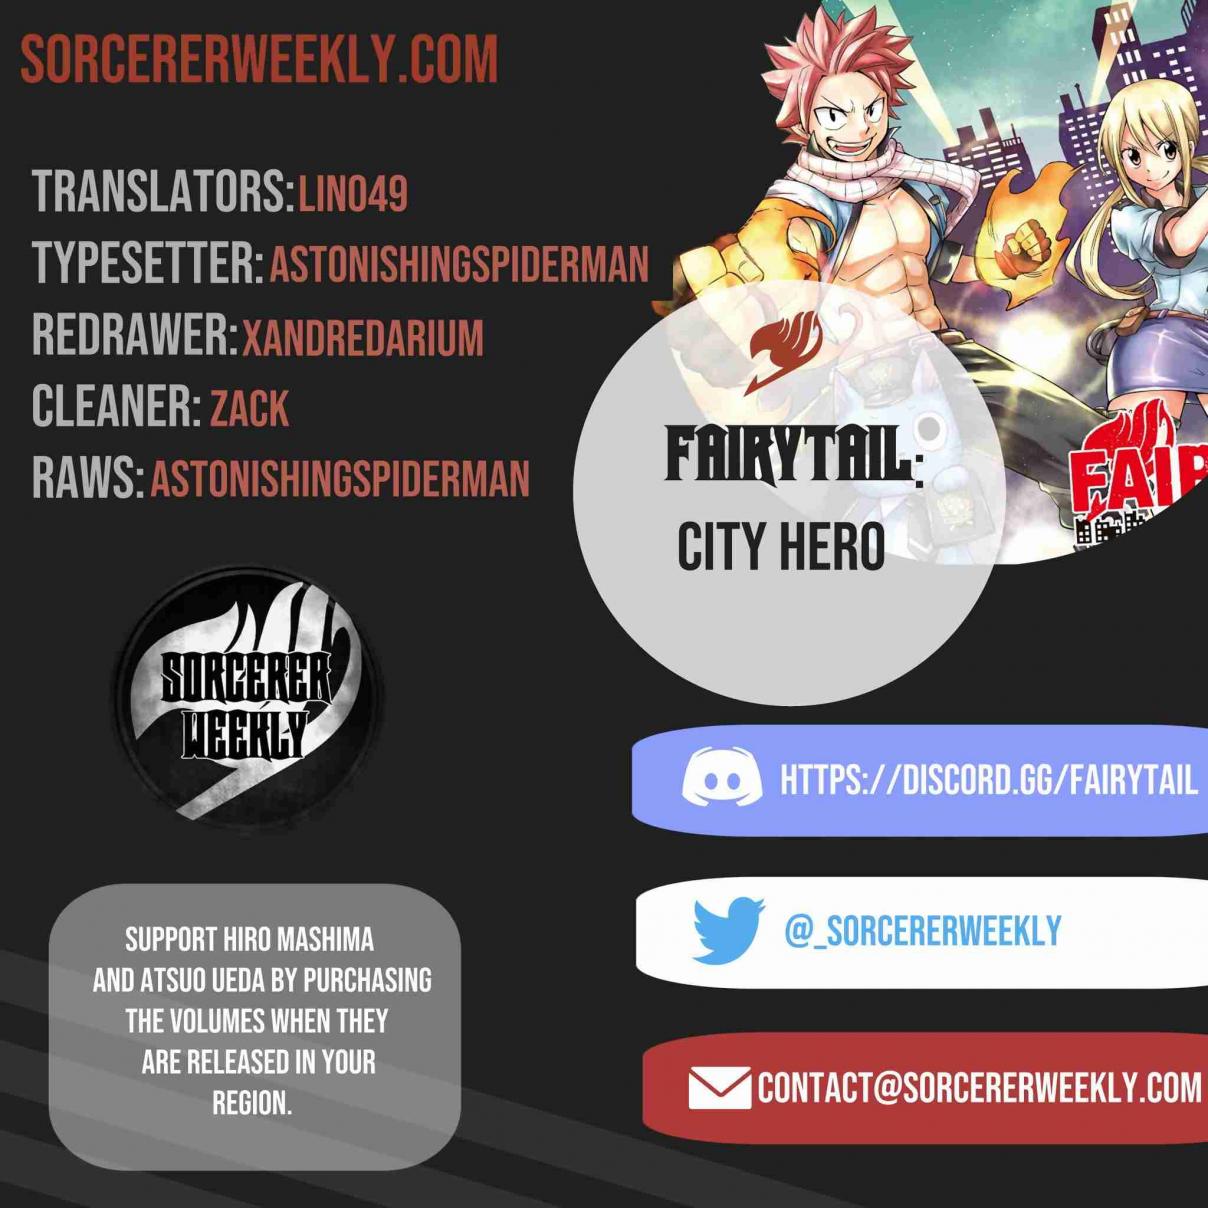 Fairy Tail: City Hero Ch. 28 Perish Love School Festival 1